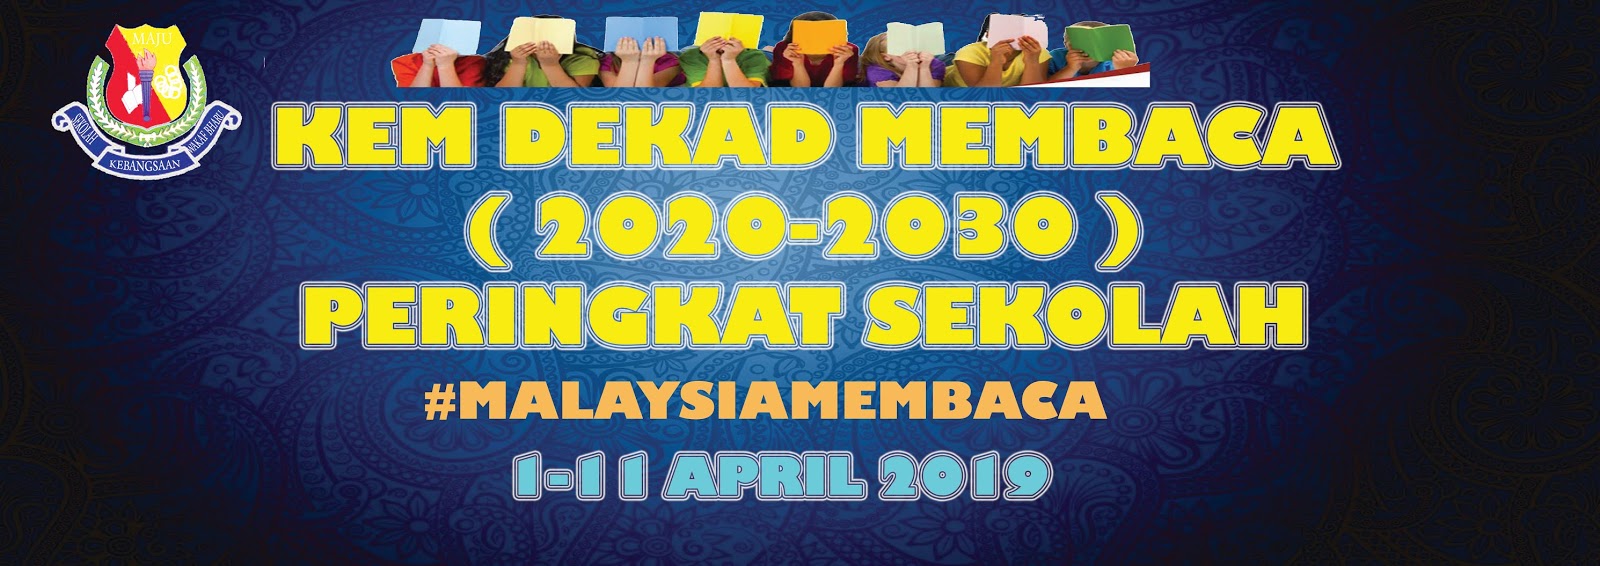 Soalan Upsr Kelantan 2019 - James Horner Unofficial